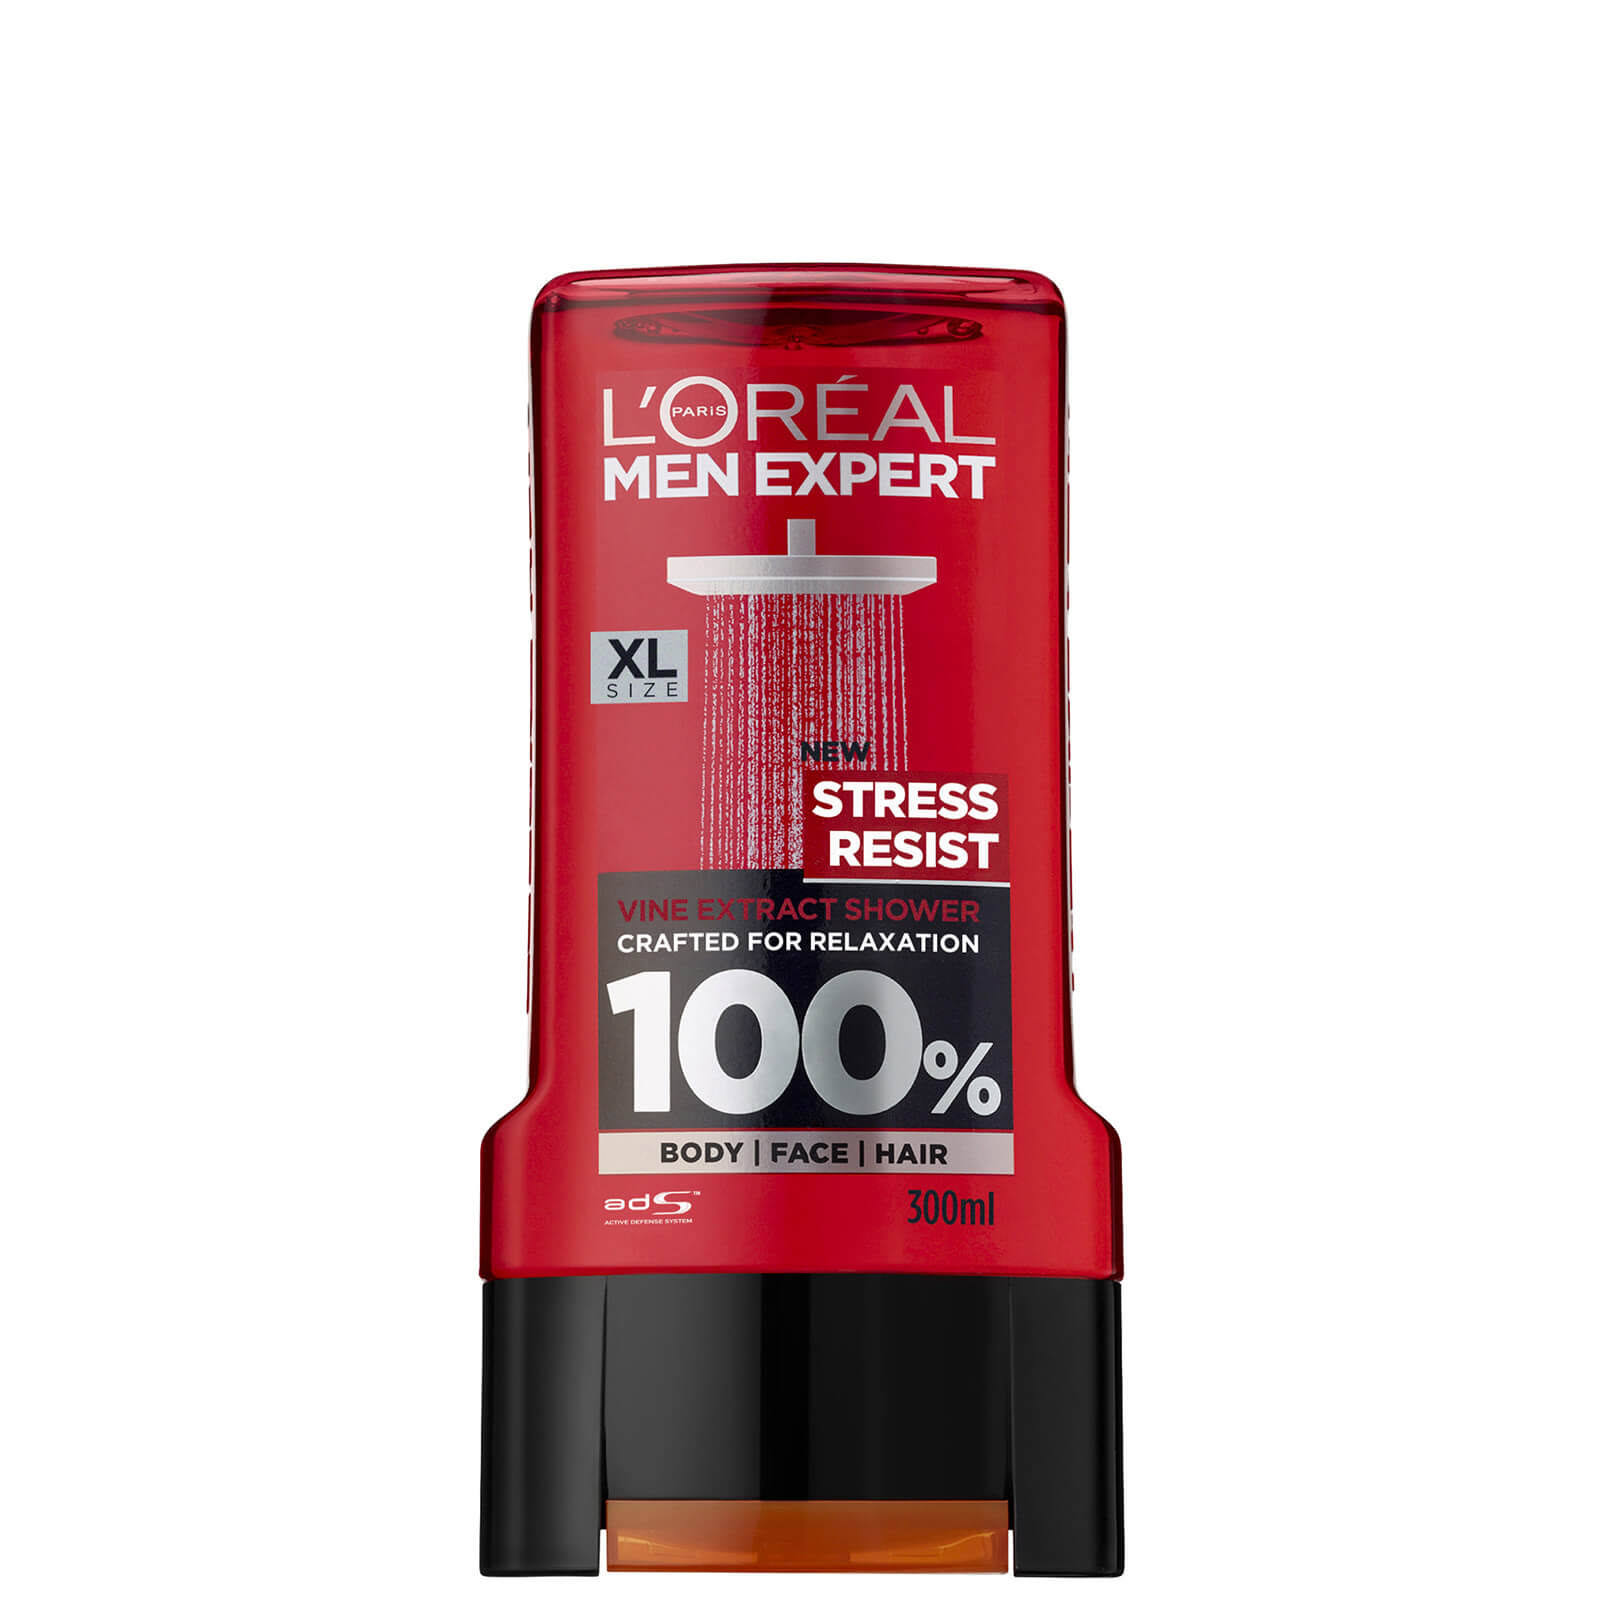 L'oreal Men Expert Stress Resist Shower Gel - 300ml